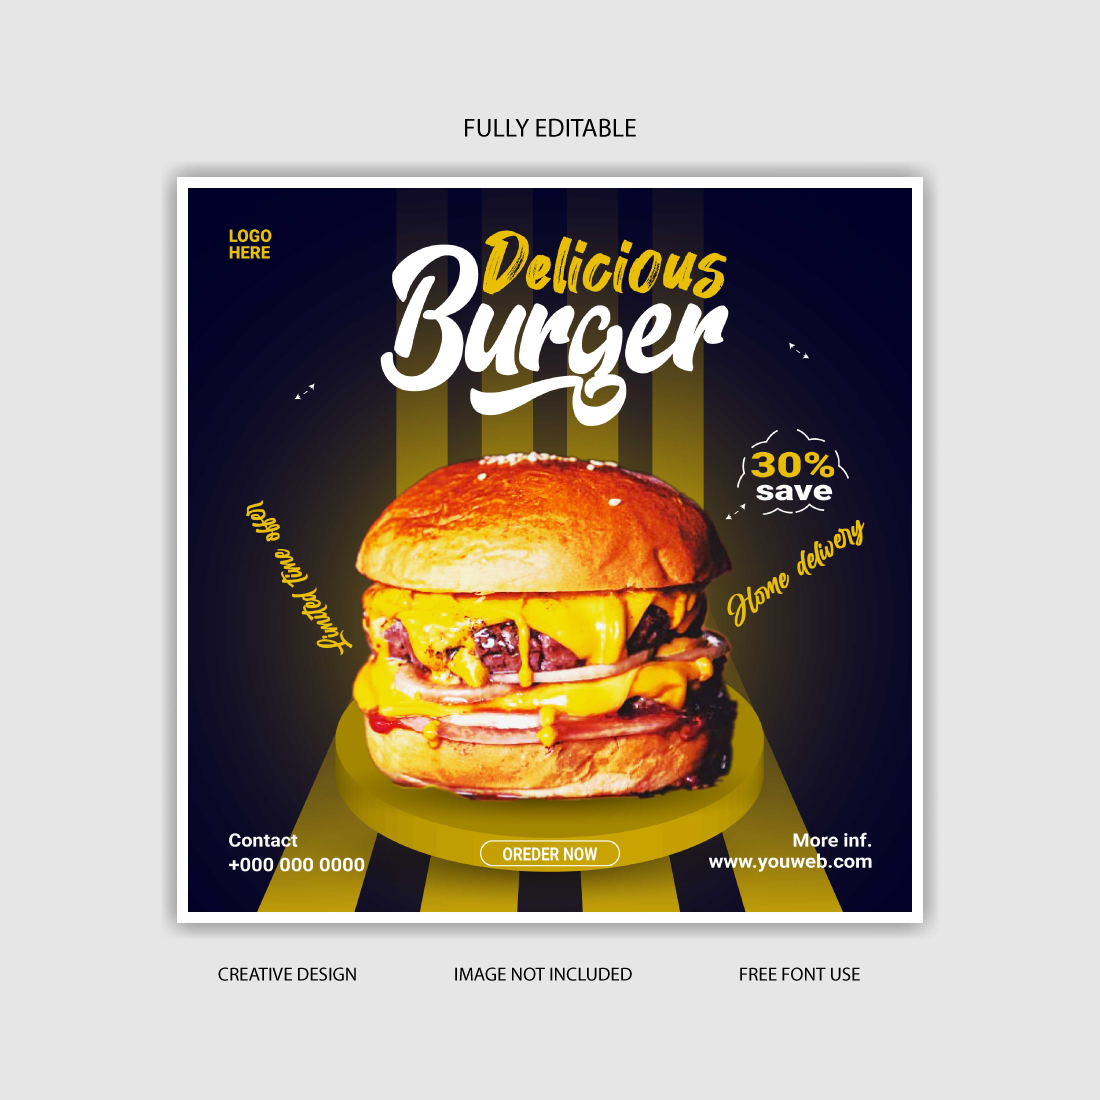 2 Burger social media post template cover image.